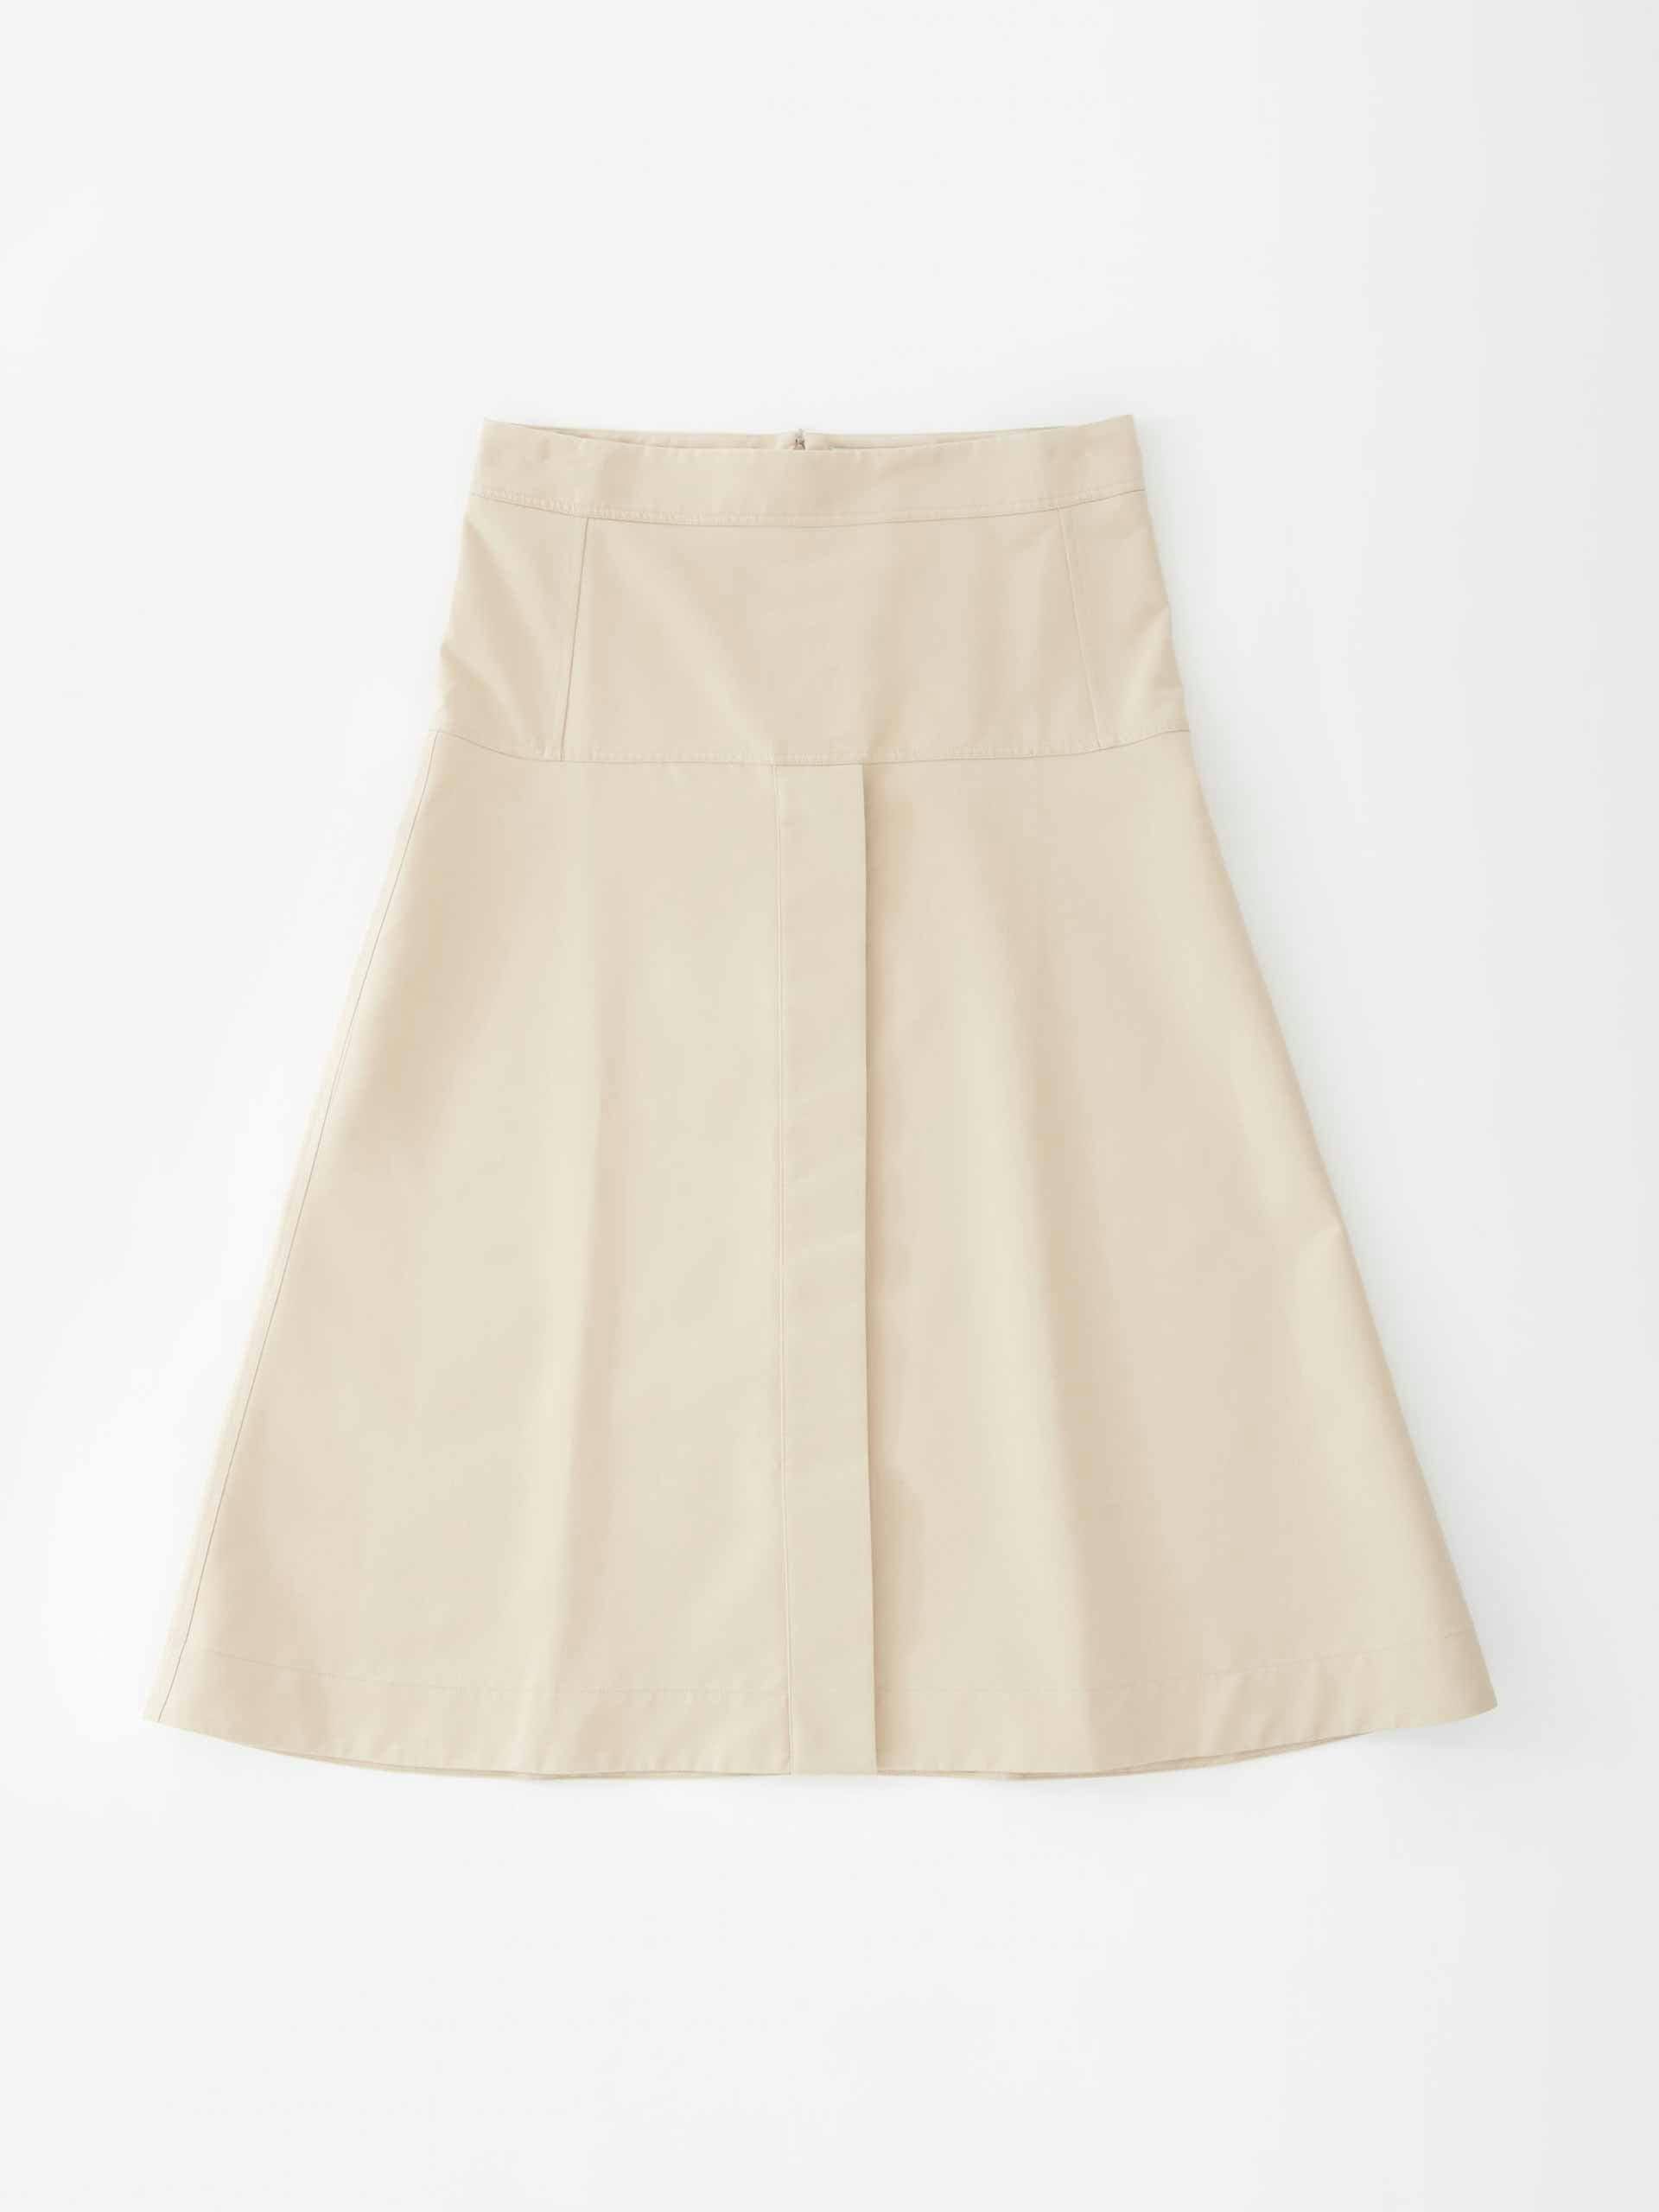 Beige A-line high-waist midi skirt